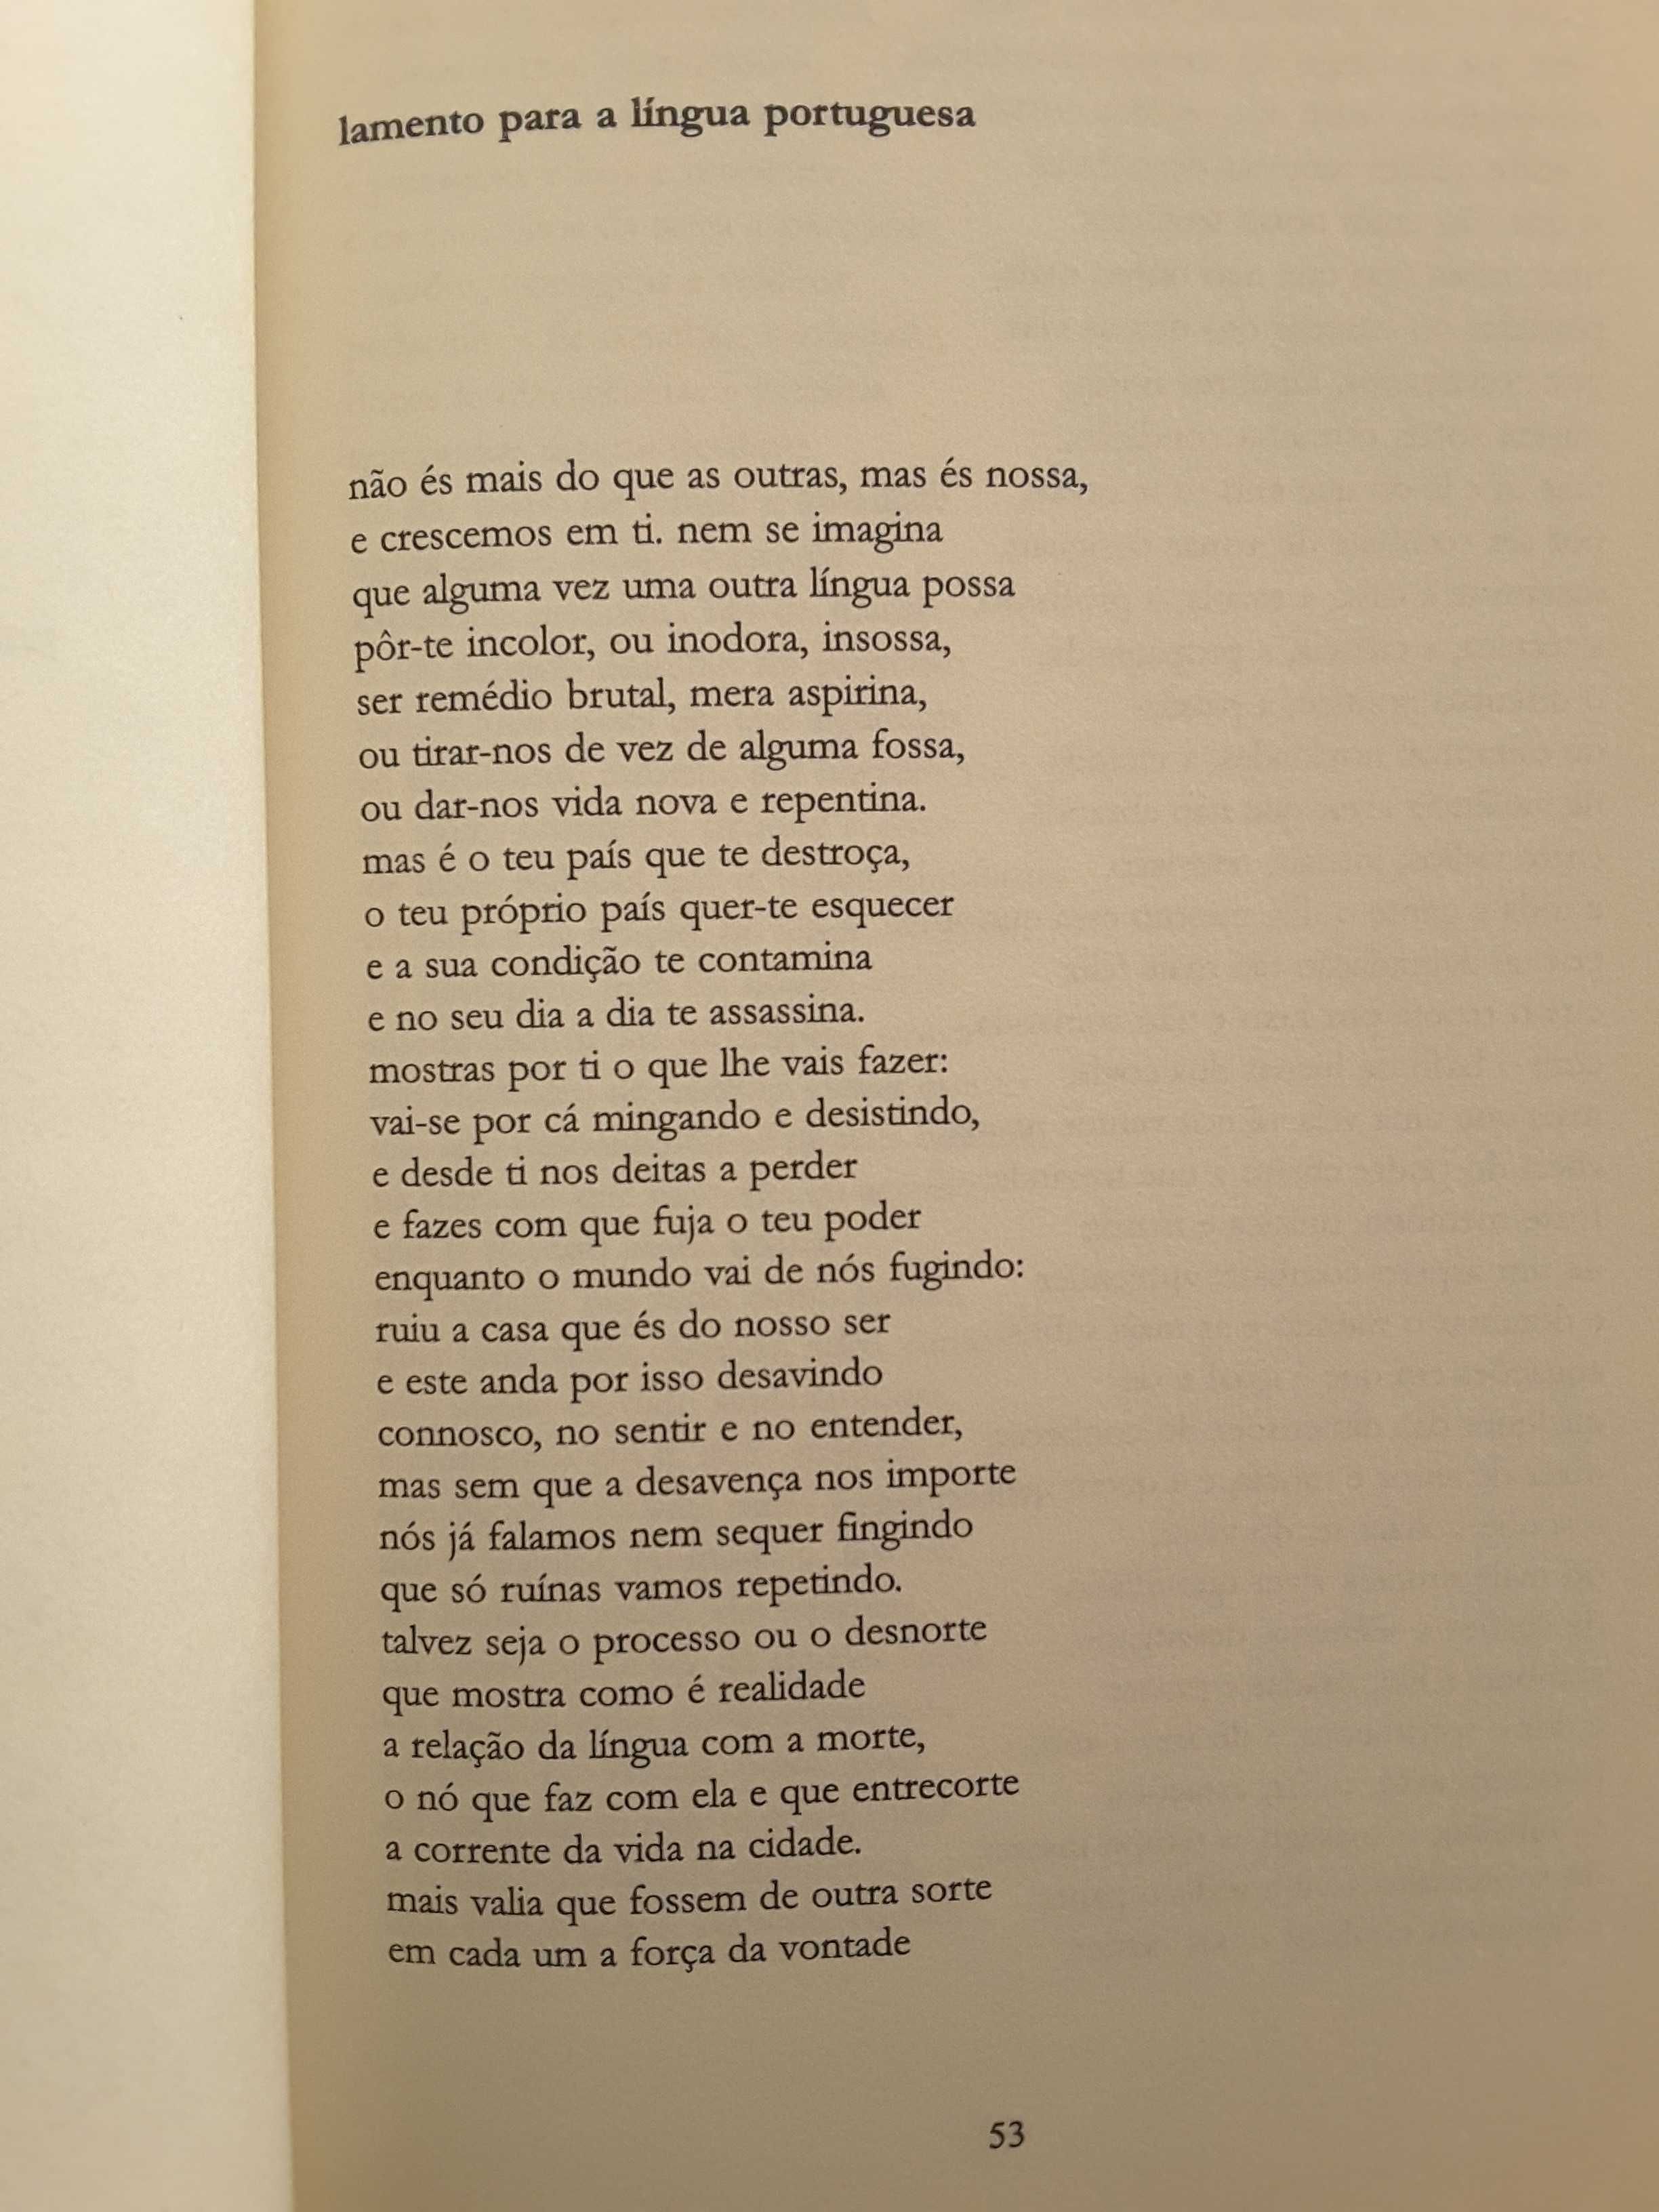 Vasco Graça Moura: Poesia / Nuno Júdice: Geografia do Caos (Algarve)